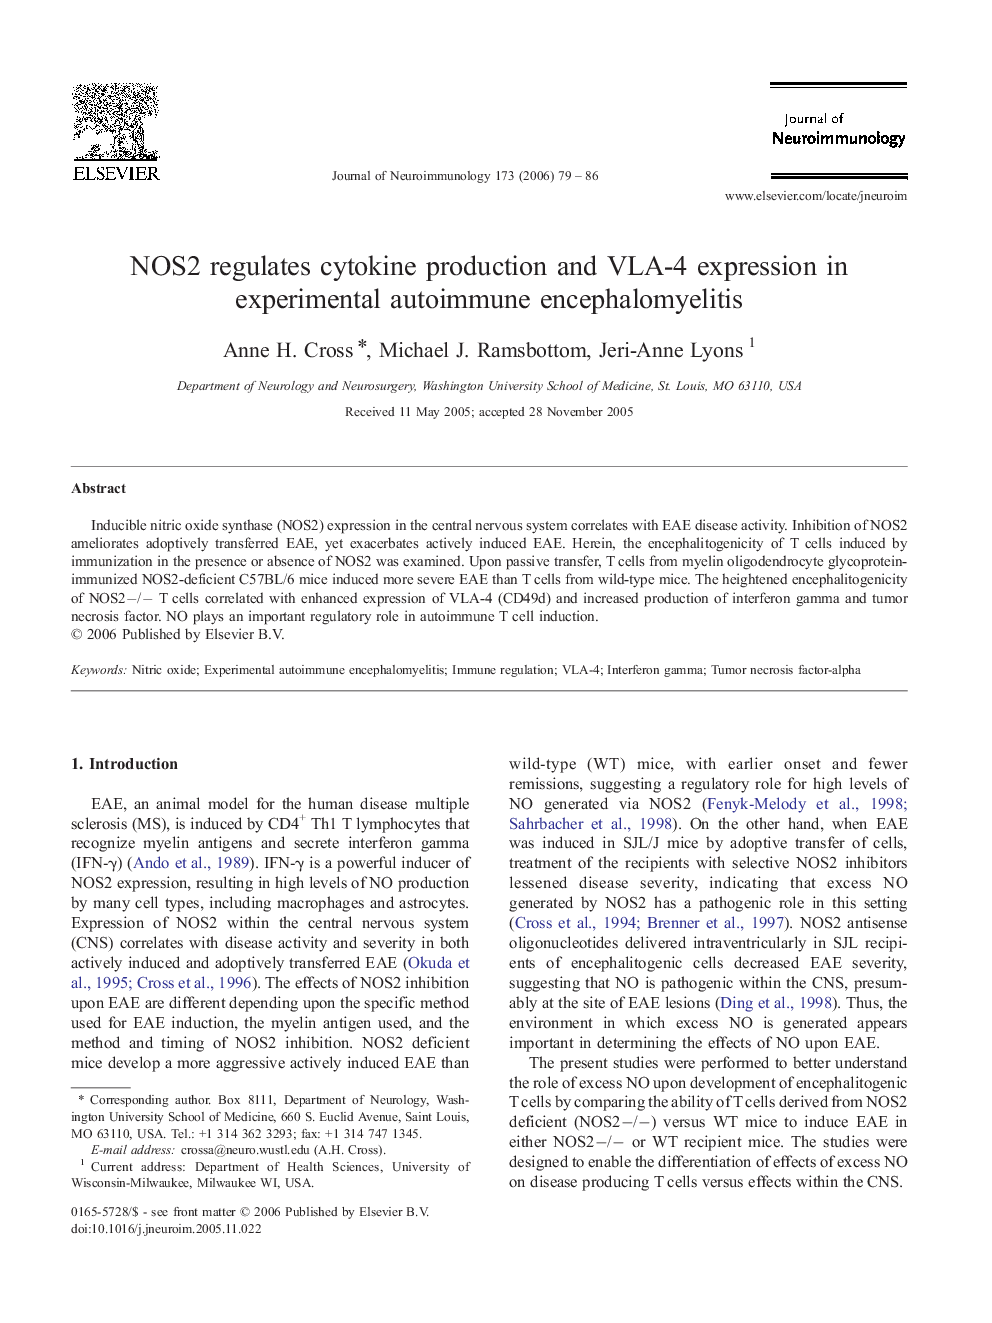 NOS2 regulates cytokine production and VLA-4 expression in experimental autoimmune encephalomyelitis